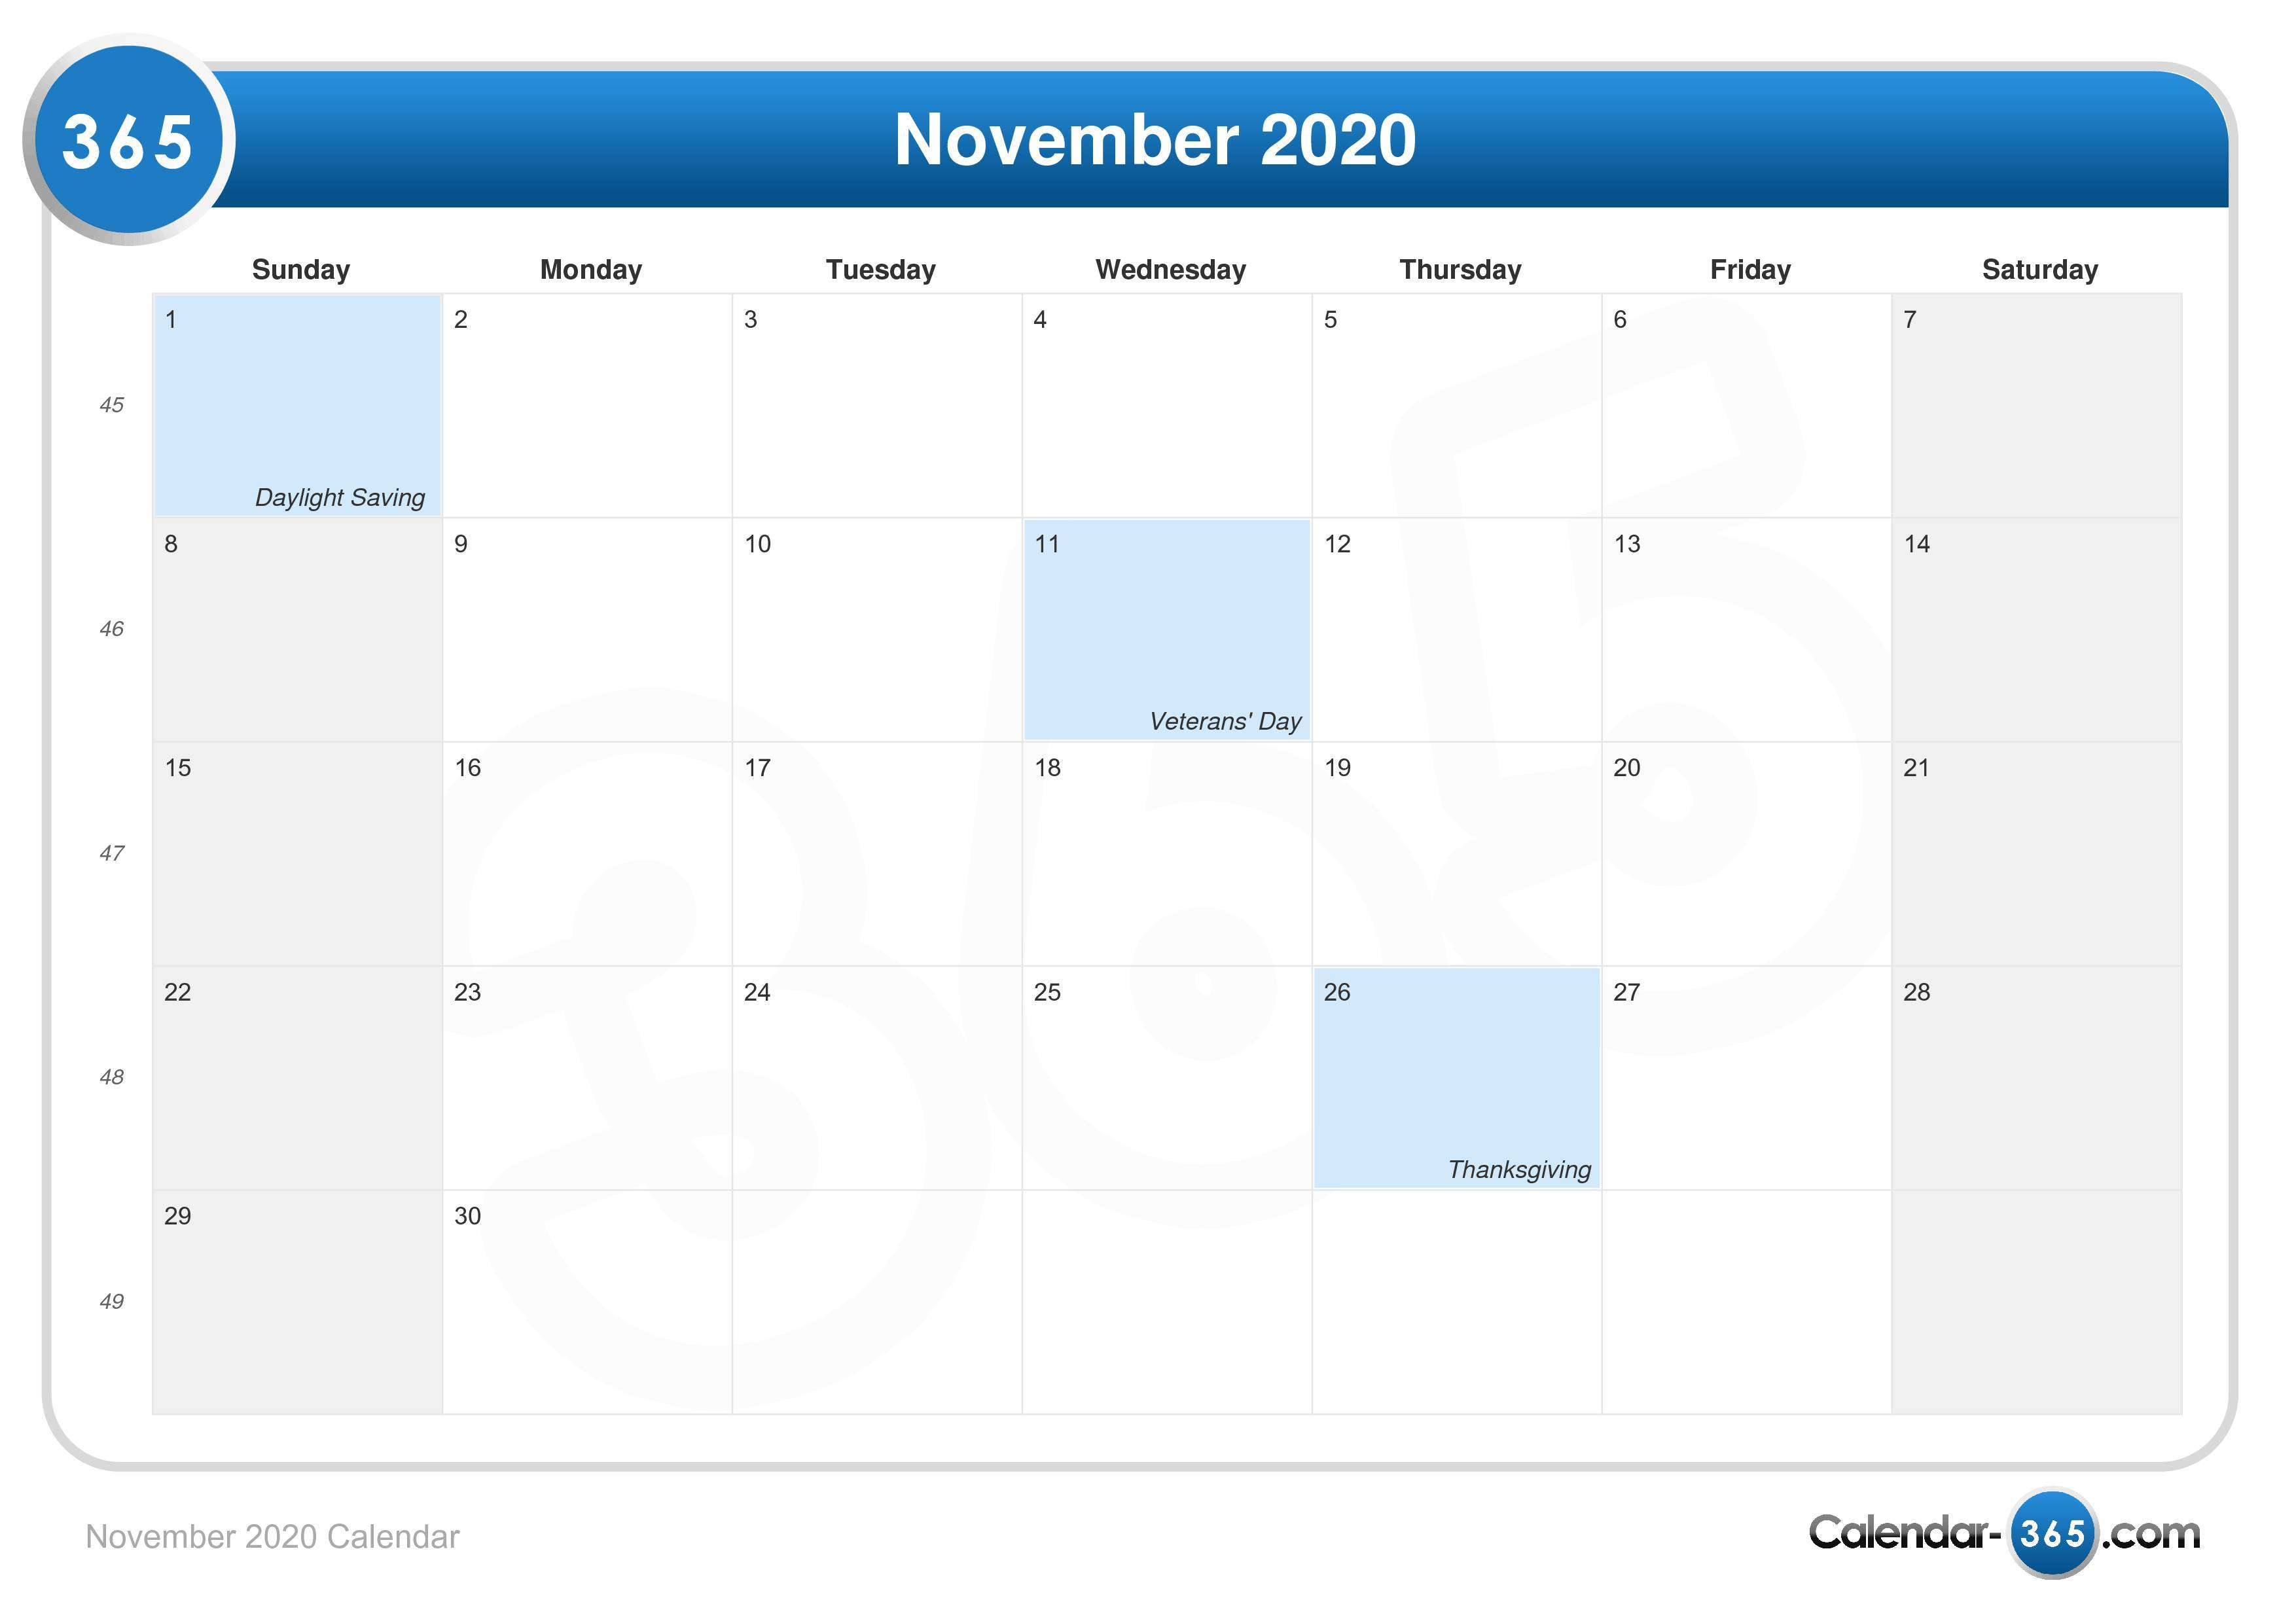 November 2020 Calendar in Uc Berkeley 2020-2020 Calendar